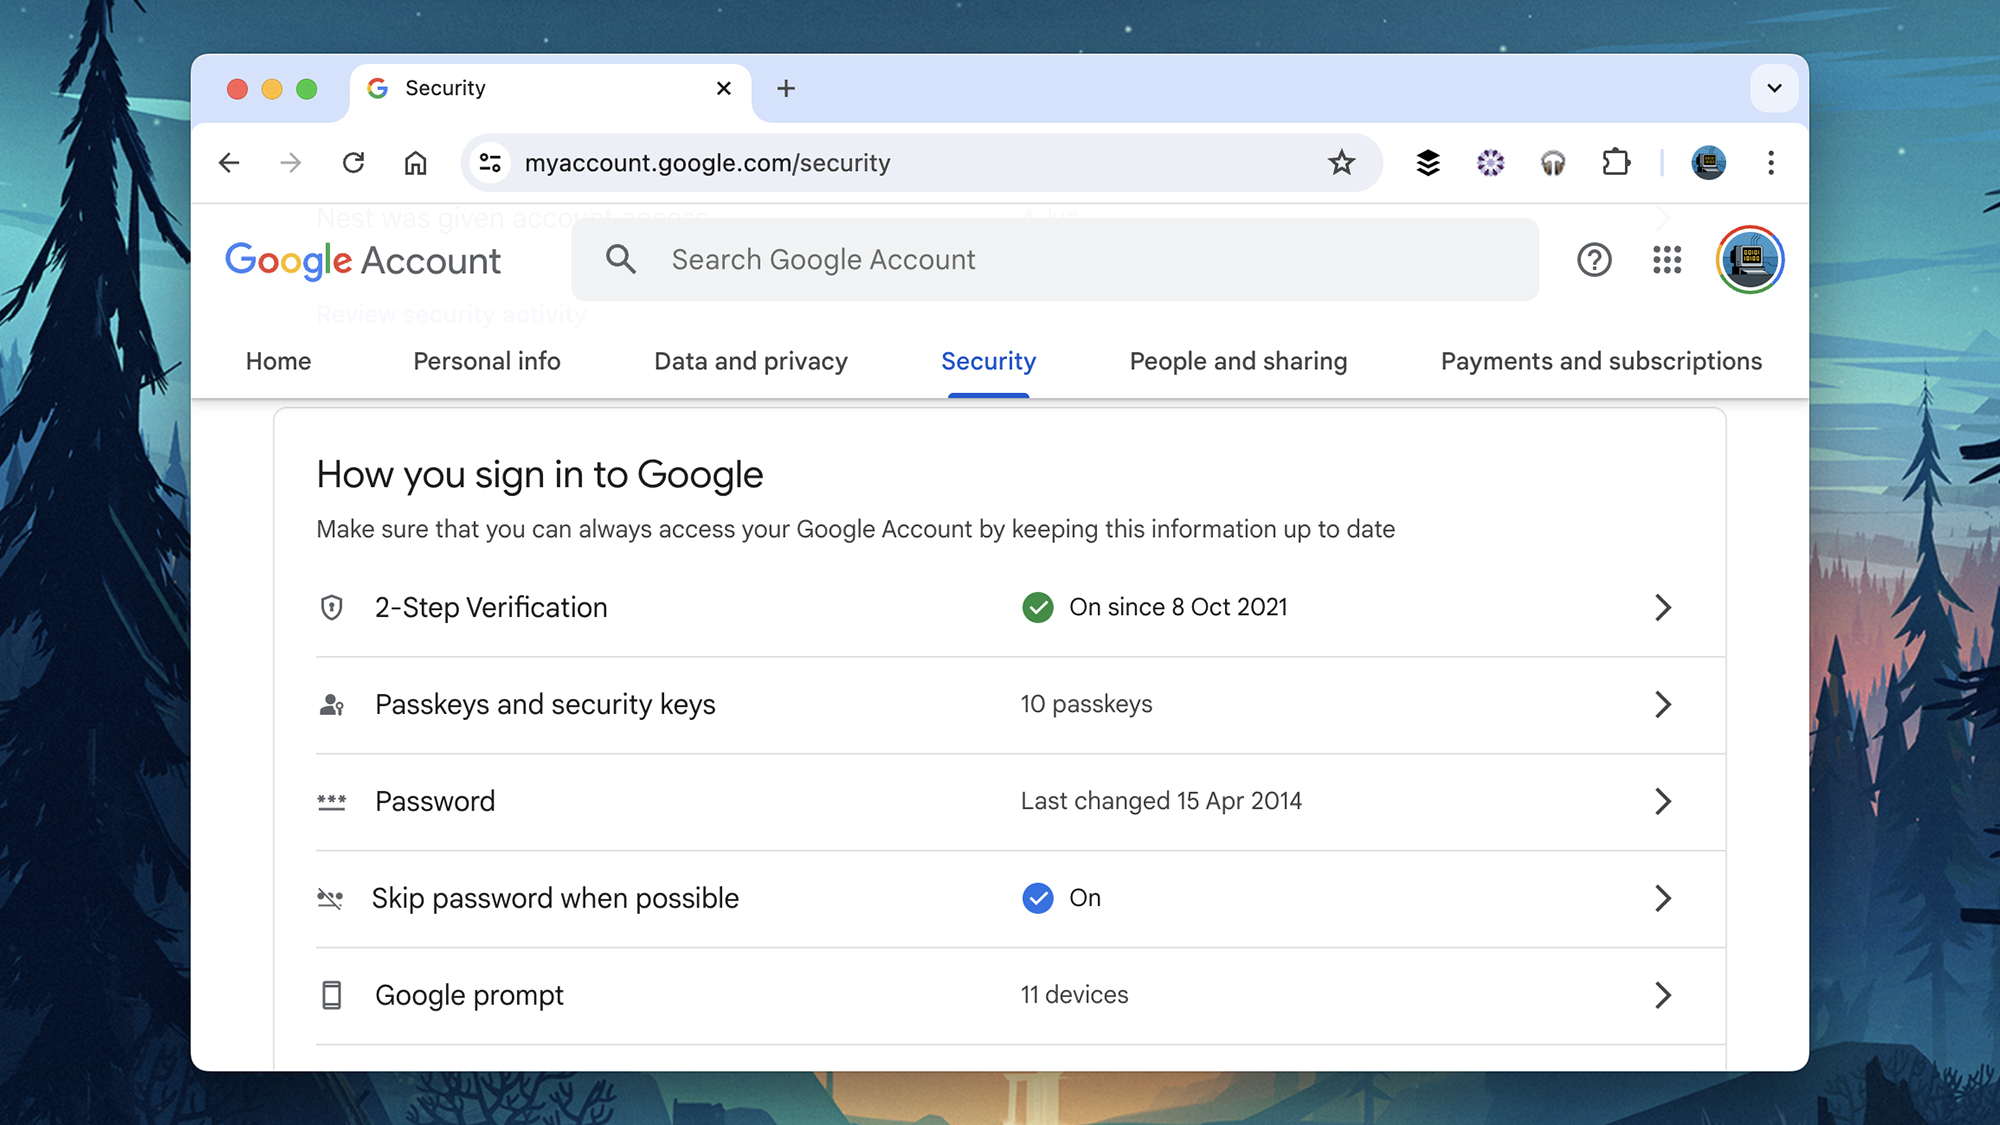 Google account settings on the web